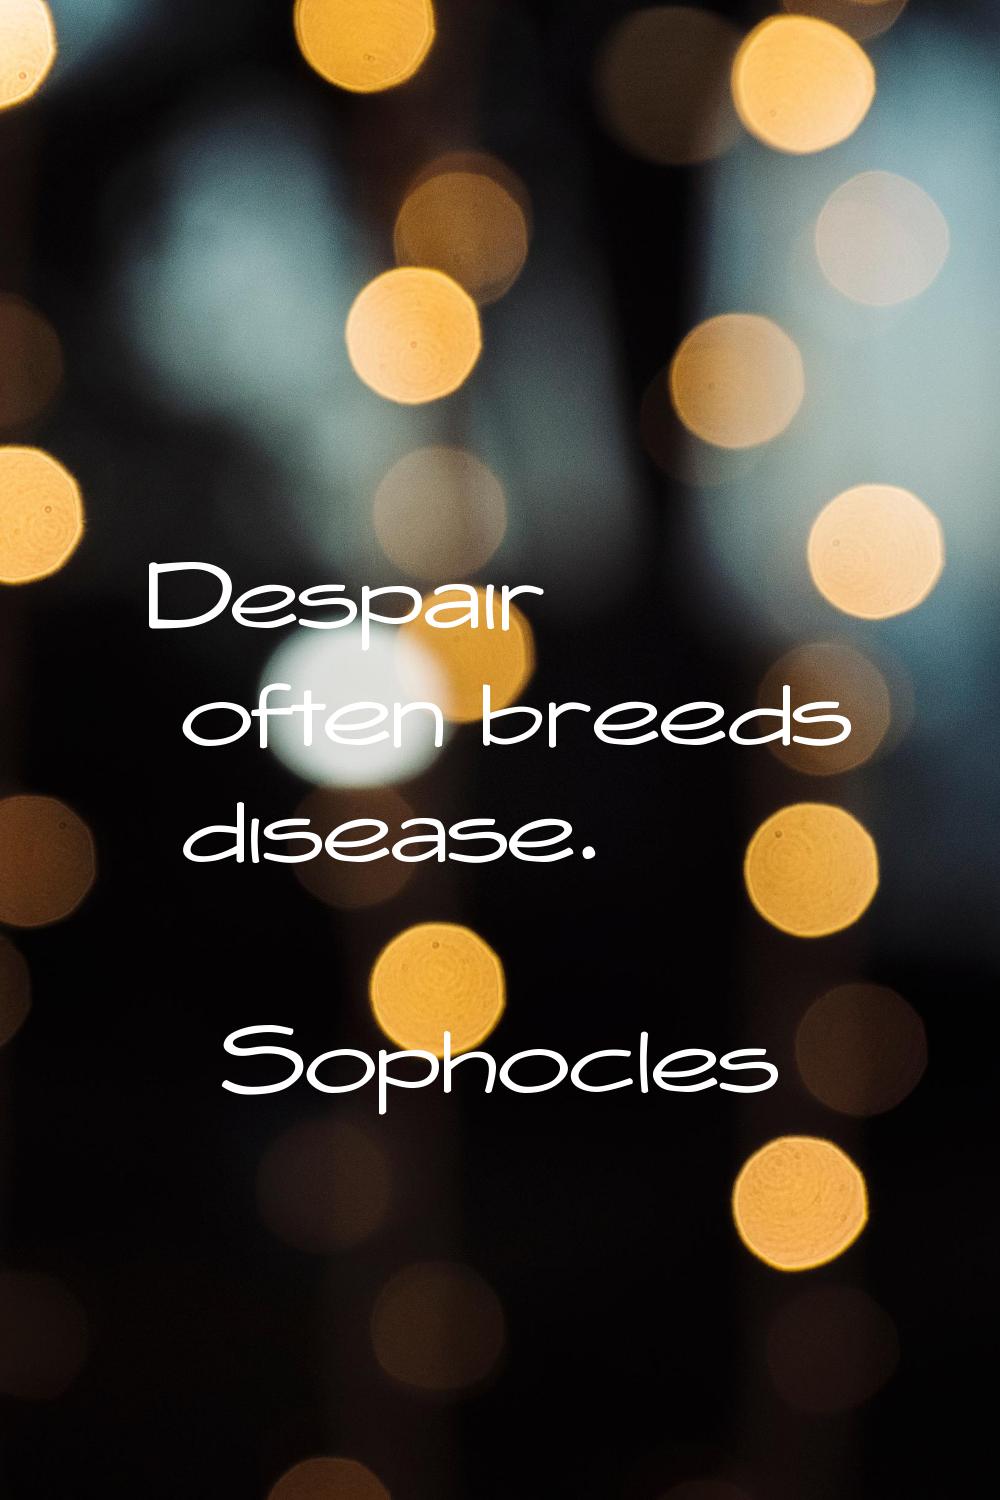 Despair often breeds disease.